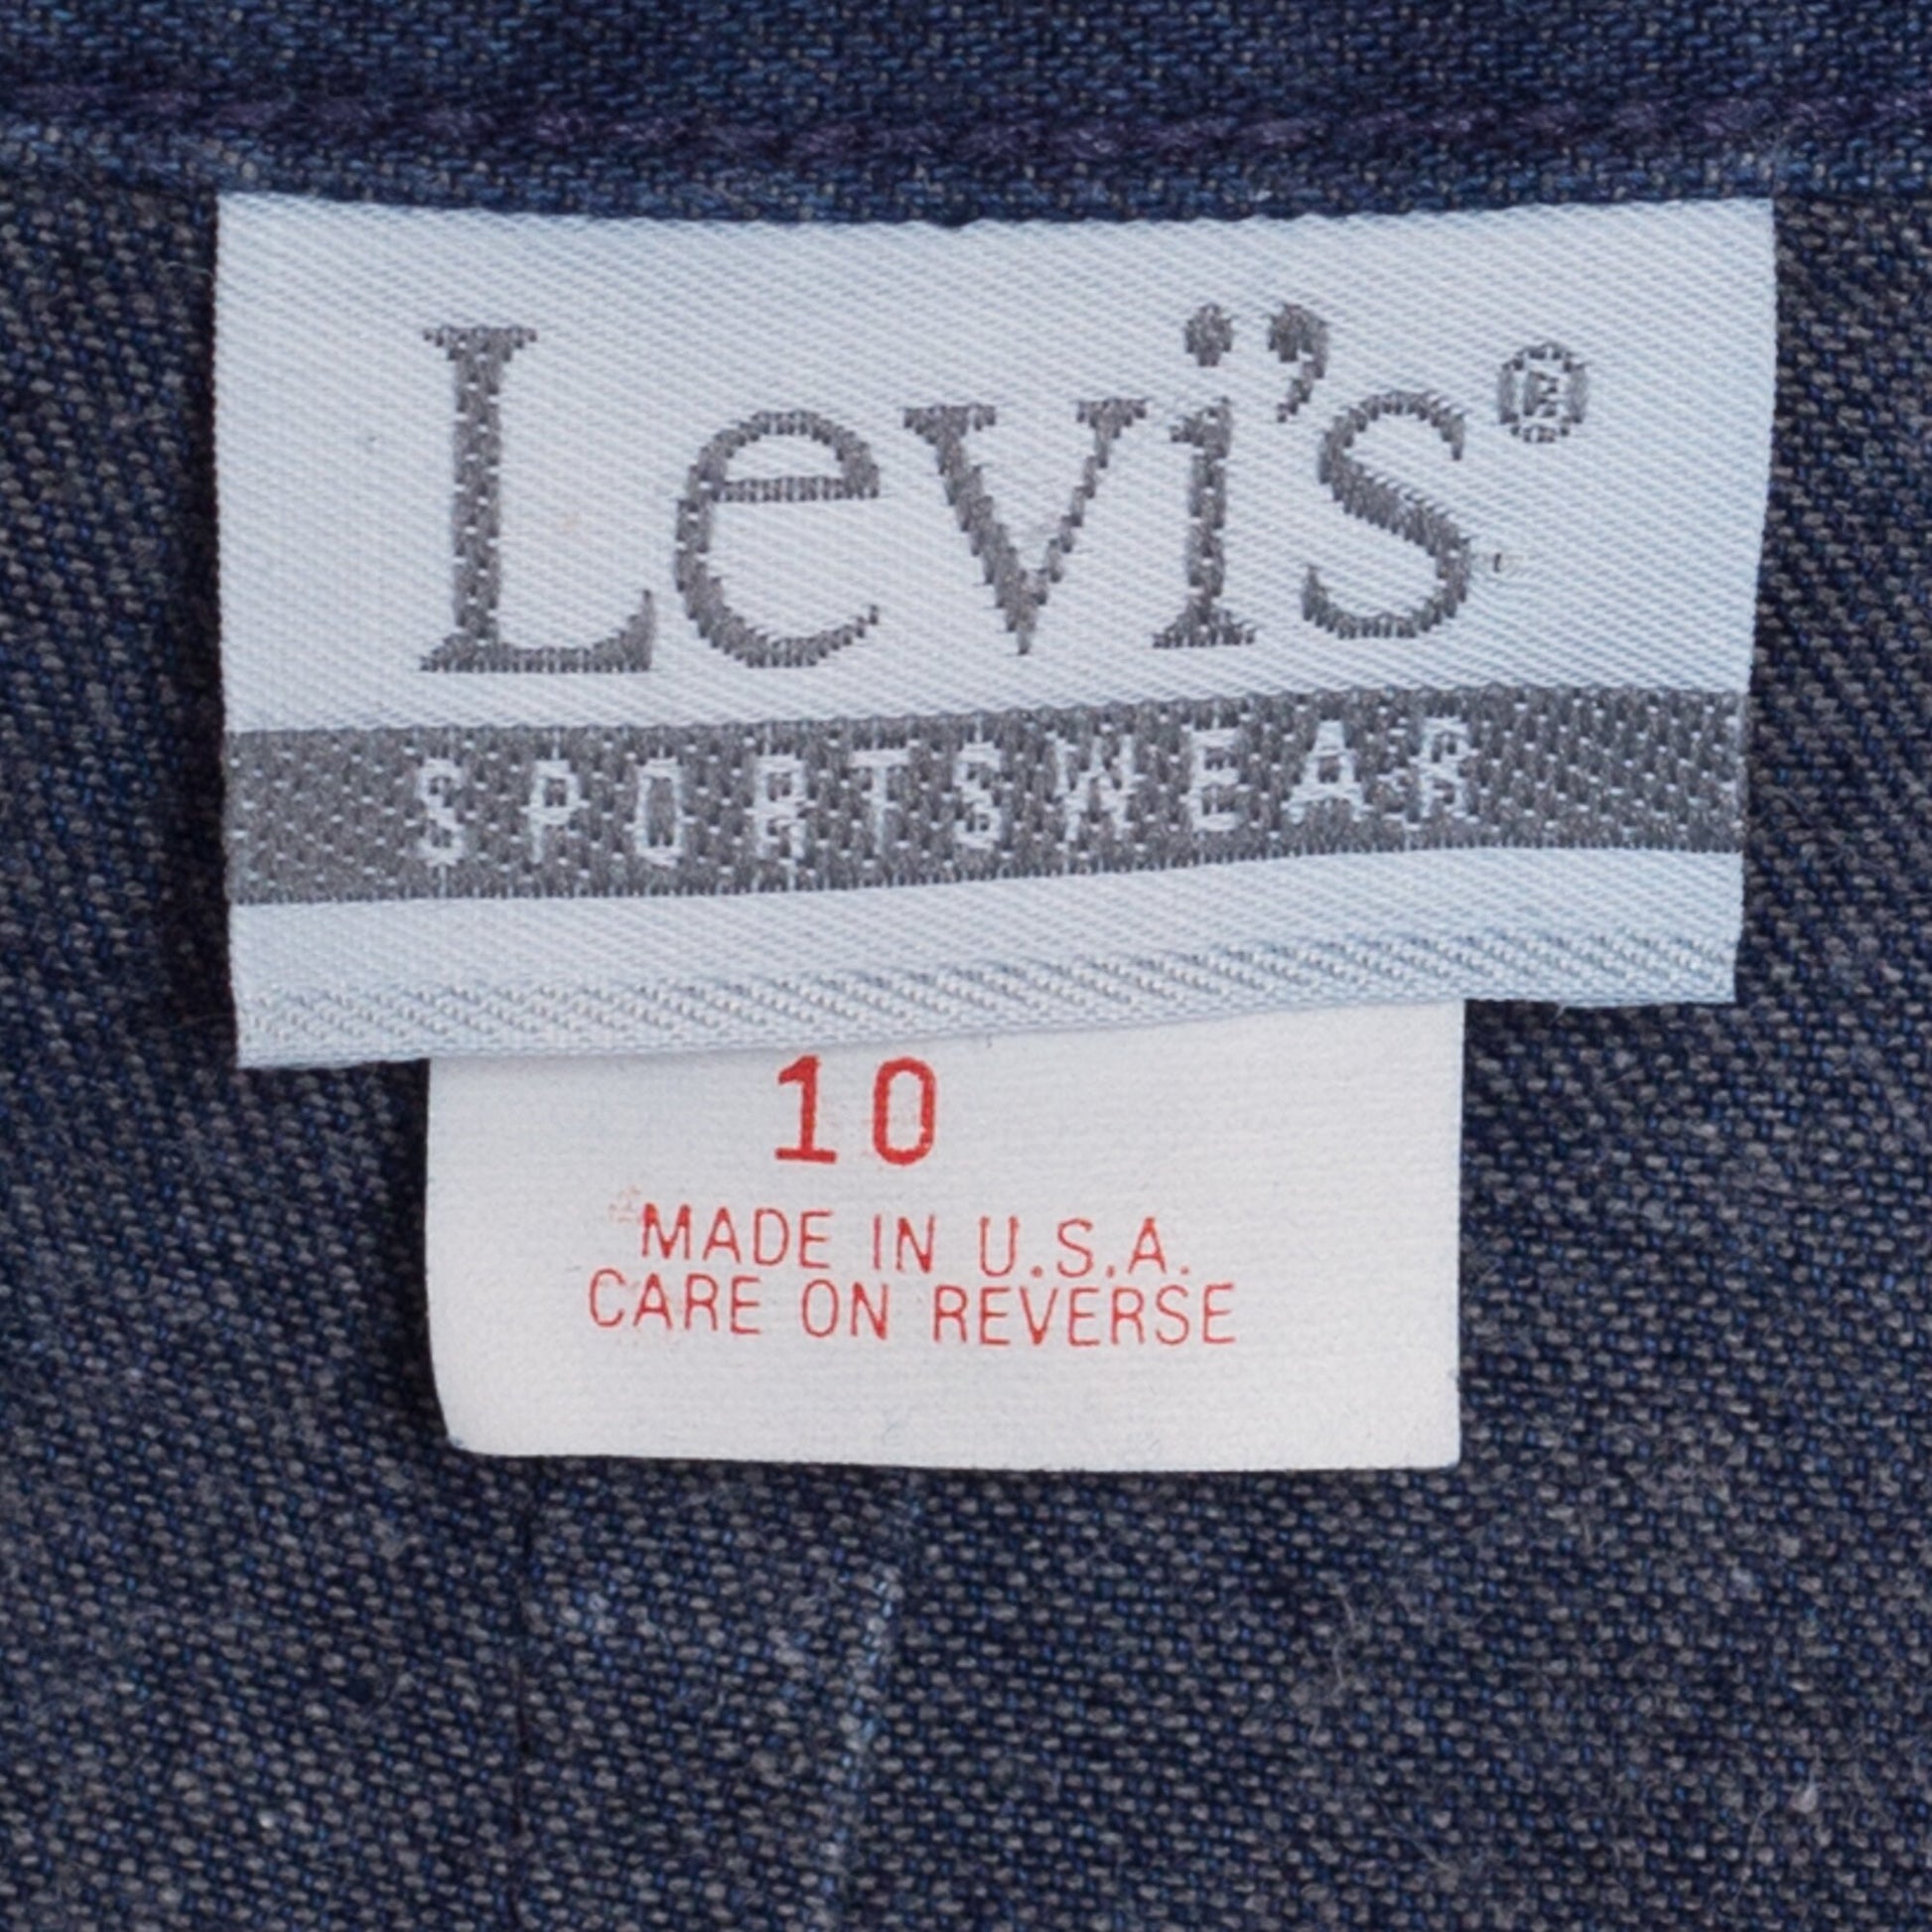 80s Levis Sportswear Denim Pleated Trousers - Small, 25.5